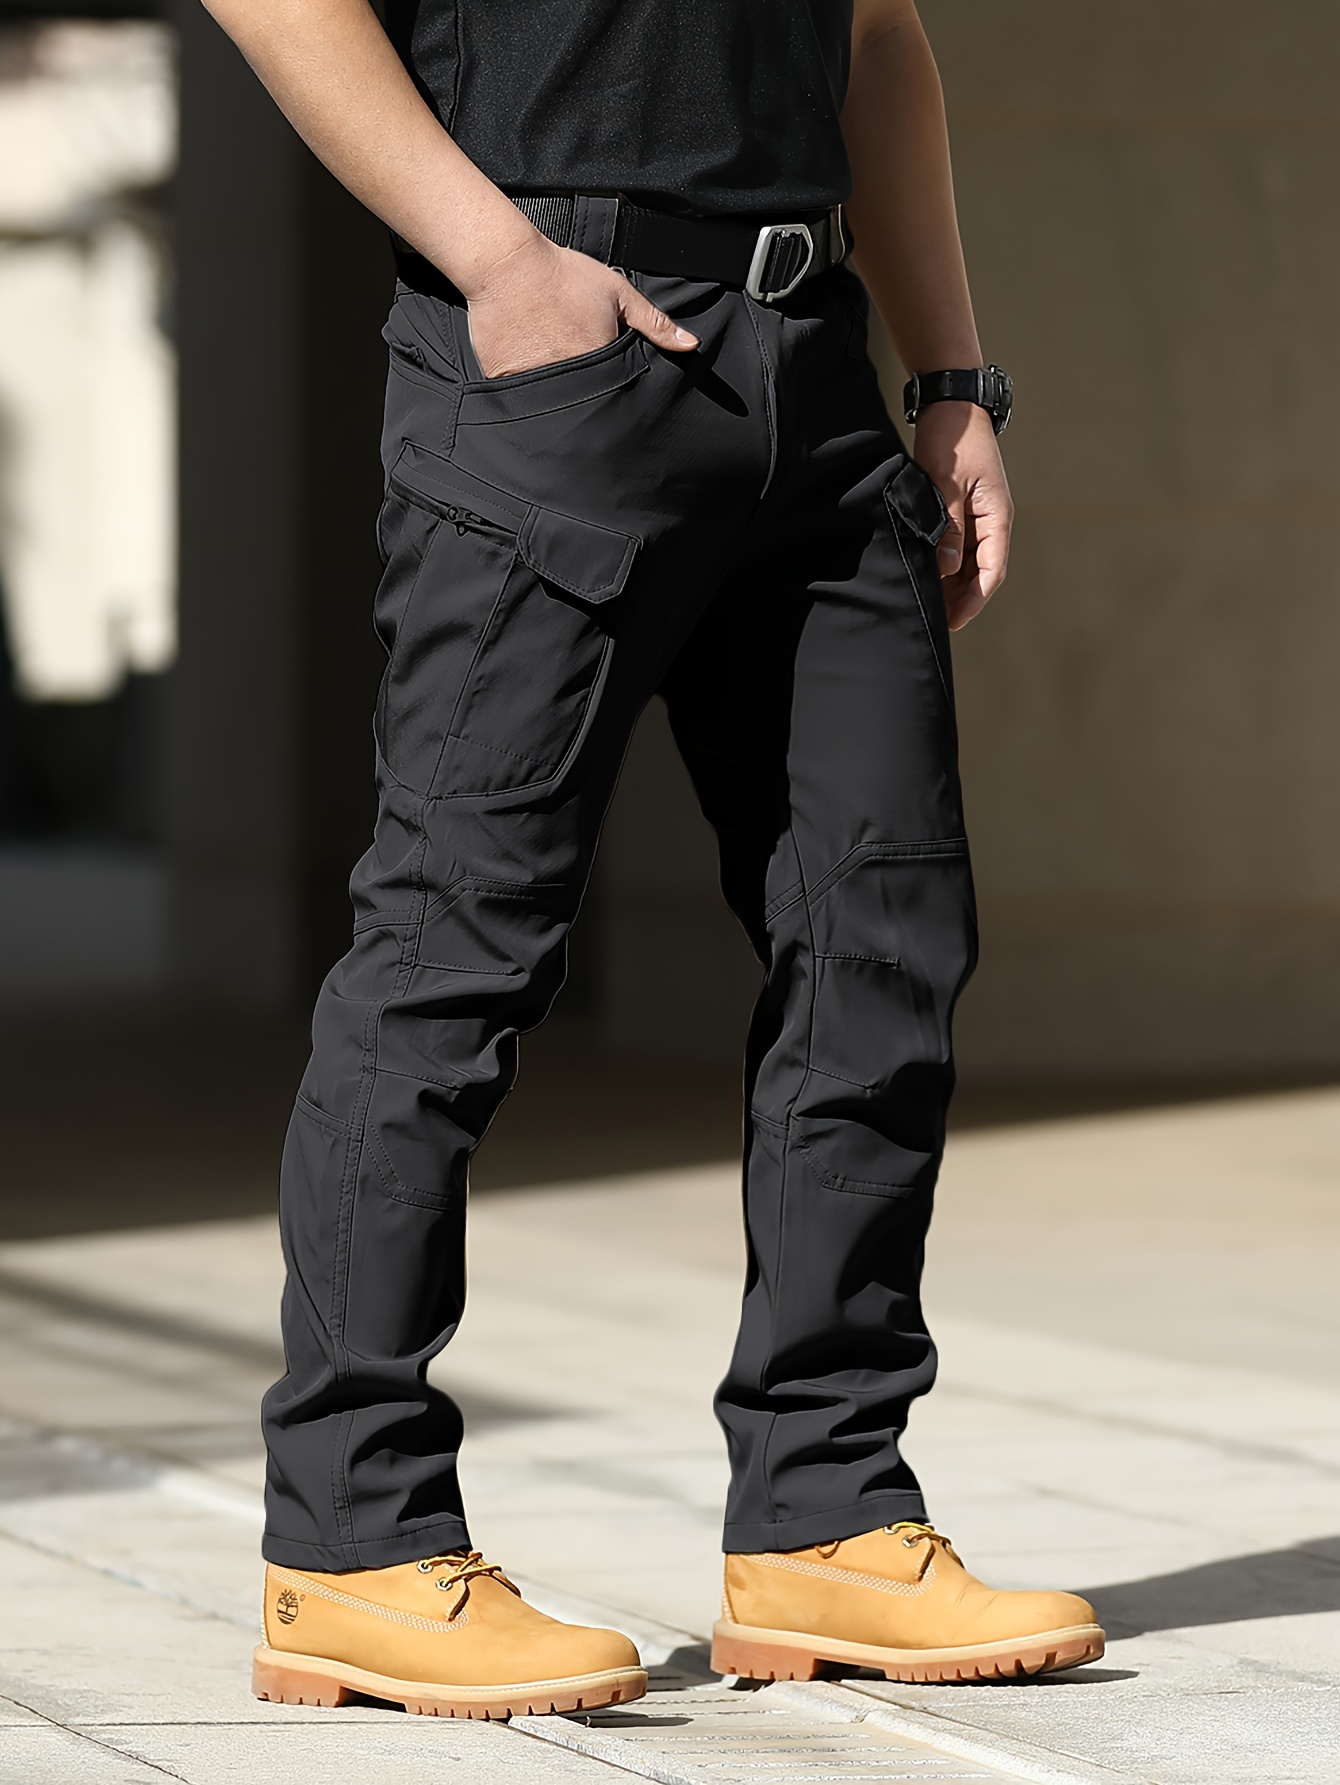 Cargo Pants for Men Relaxed Fit Causal Pants Slim Work Streetwear